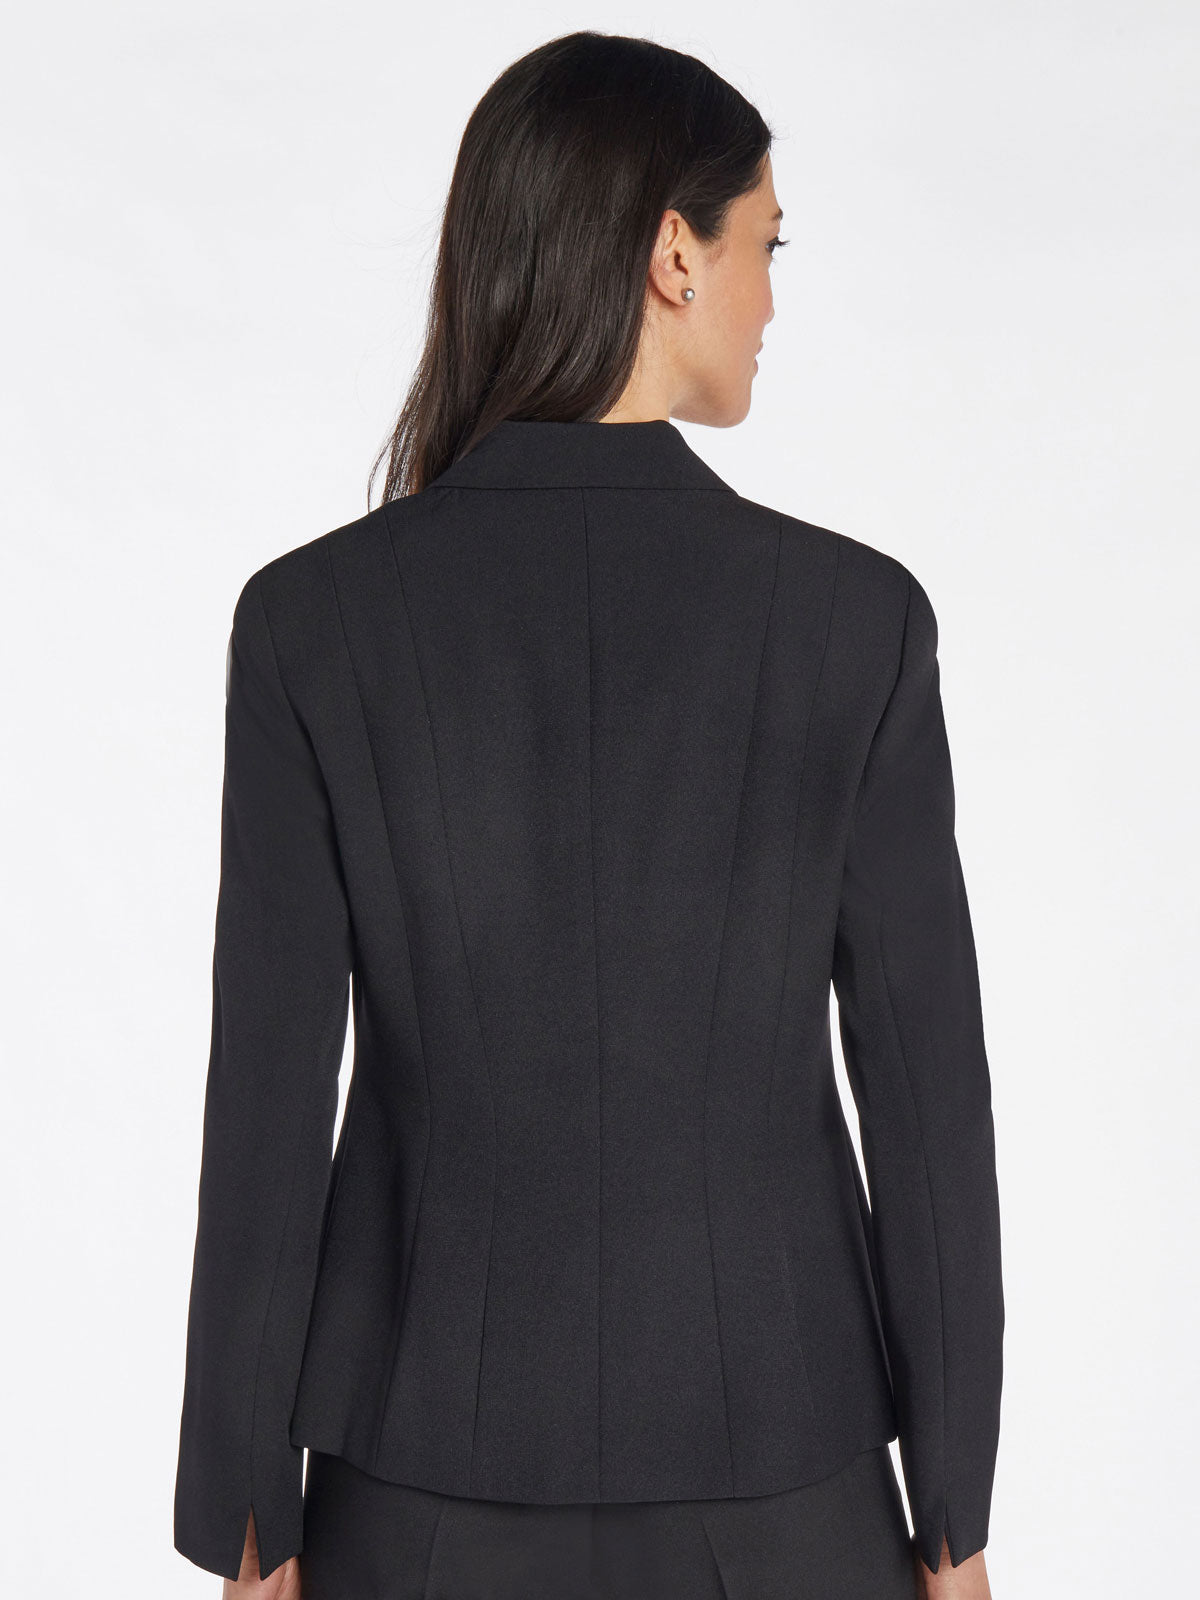 KASPER Womens Black Embellished Blazer Jacket Plus Size: 1X